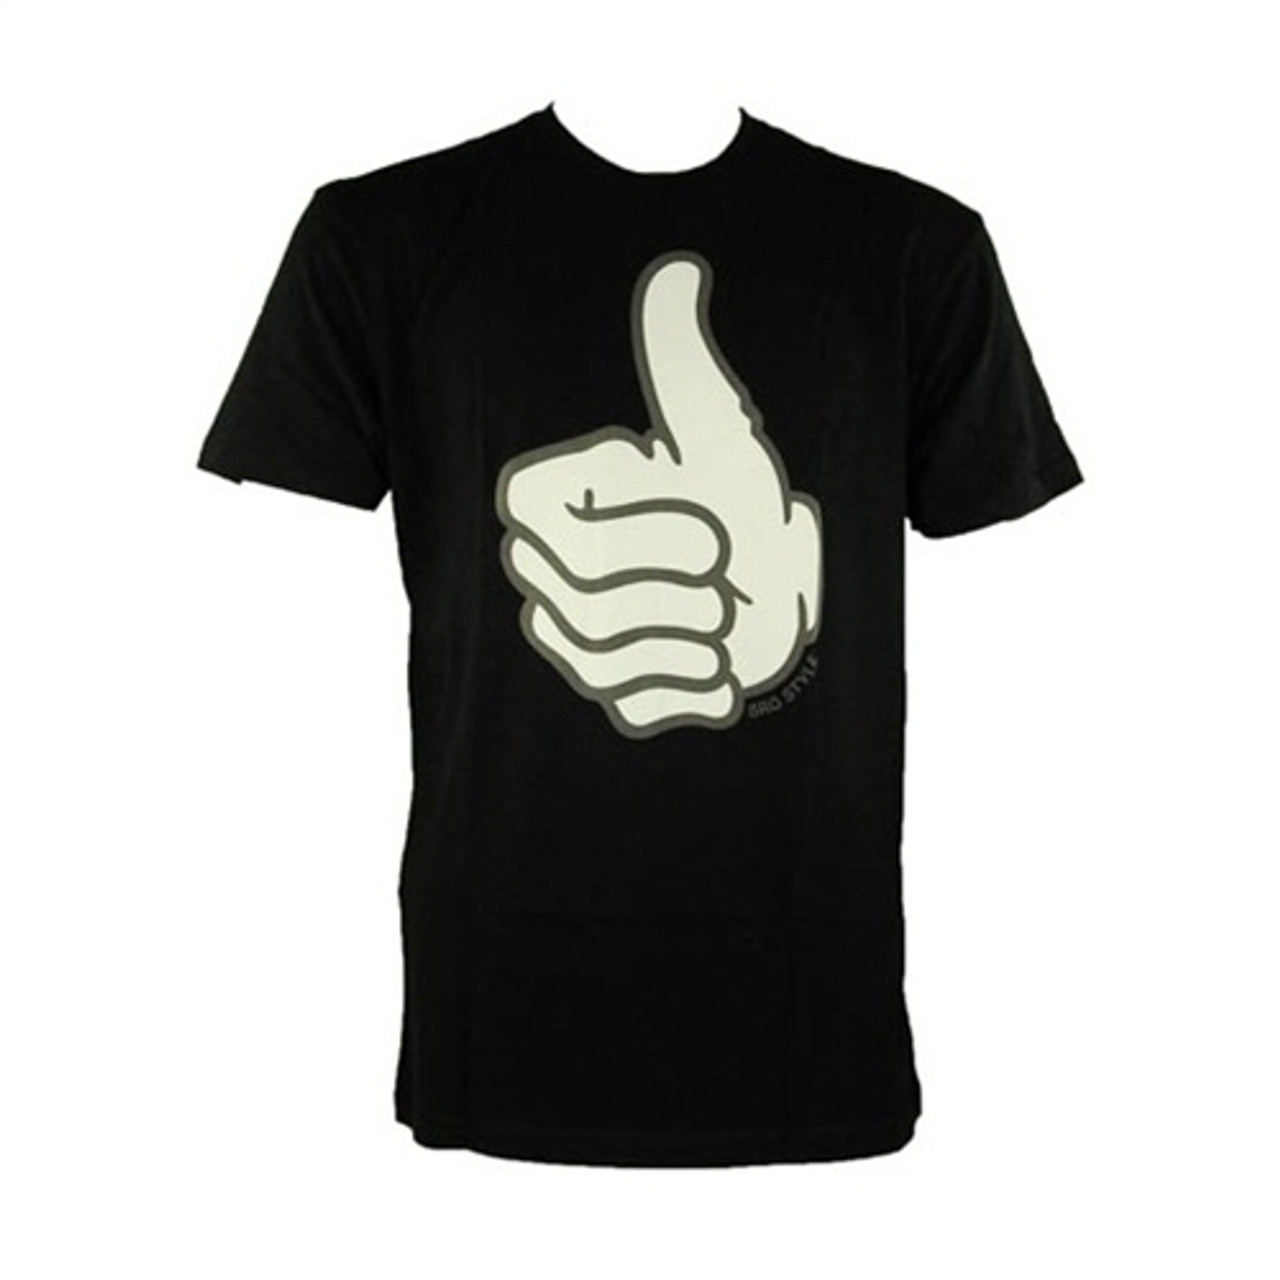 Bro Style Thumbs Up T Shirt Black